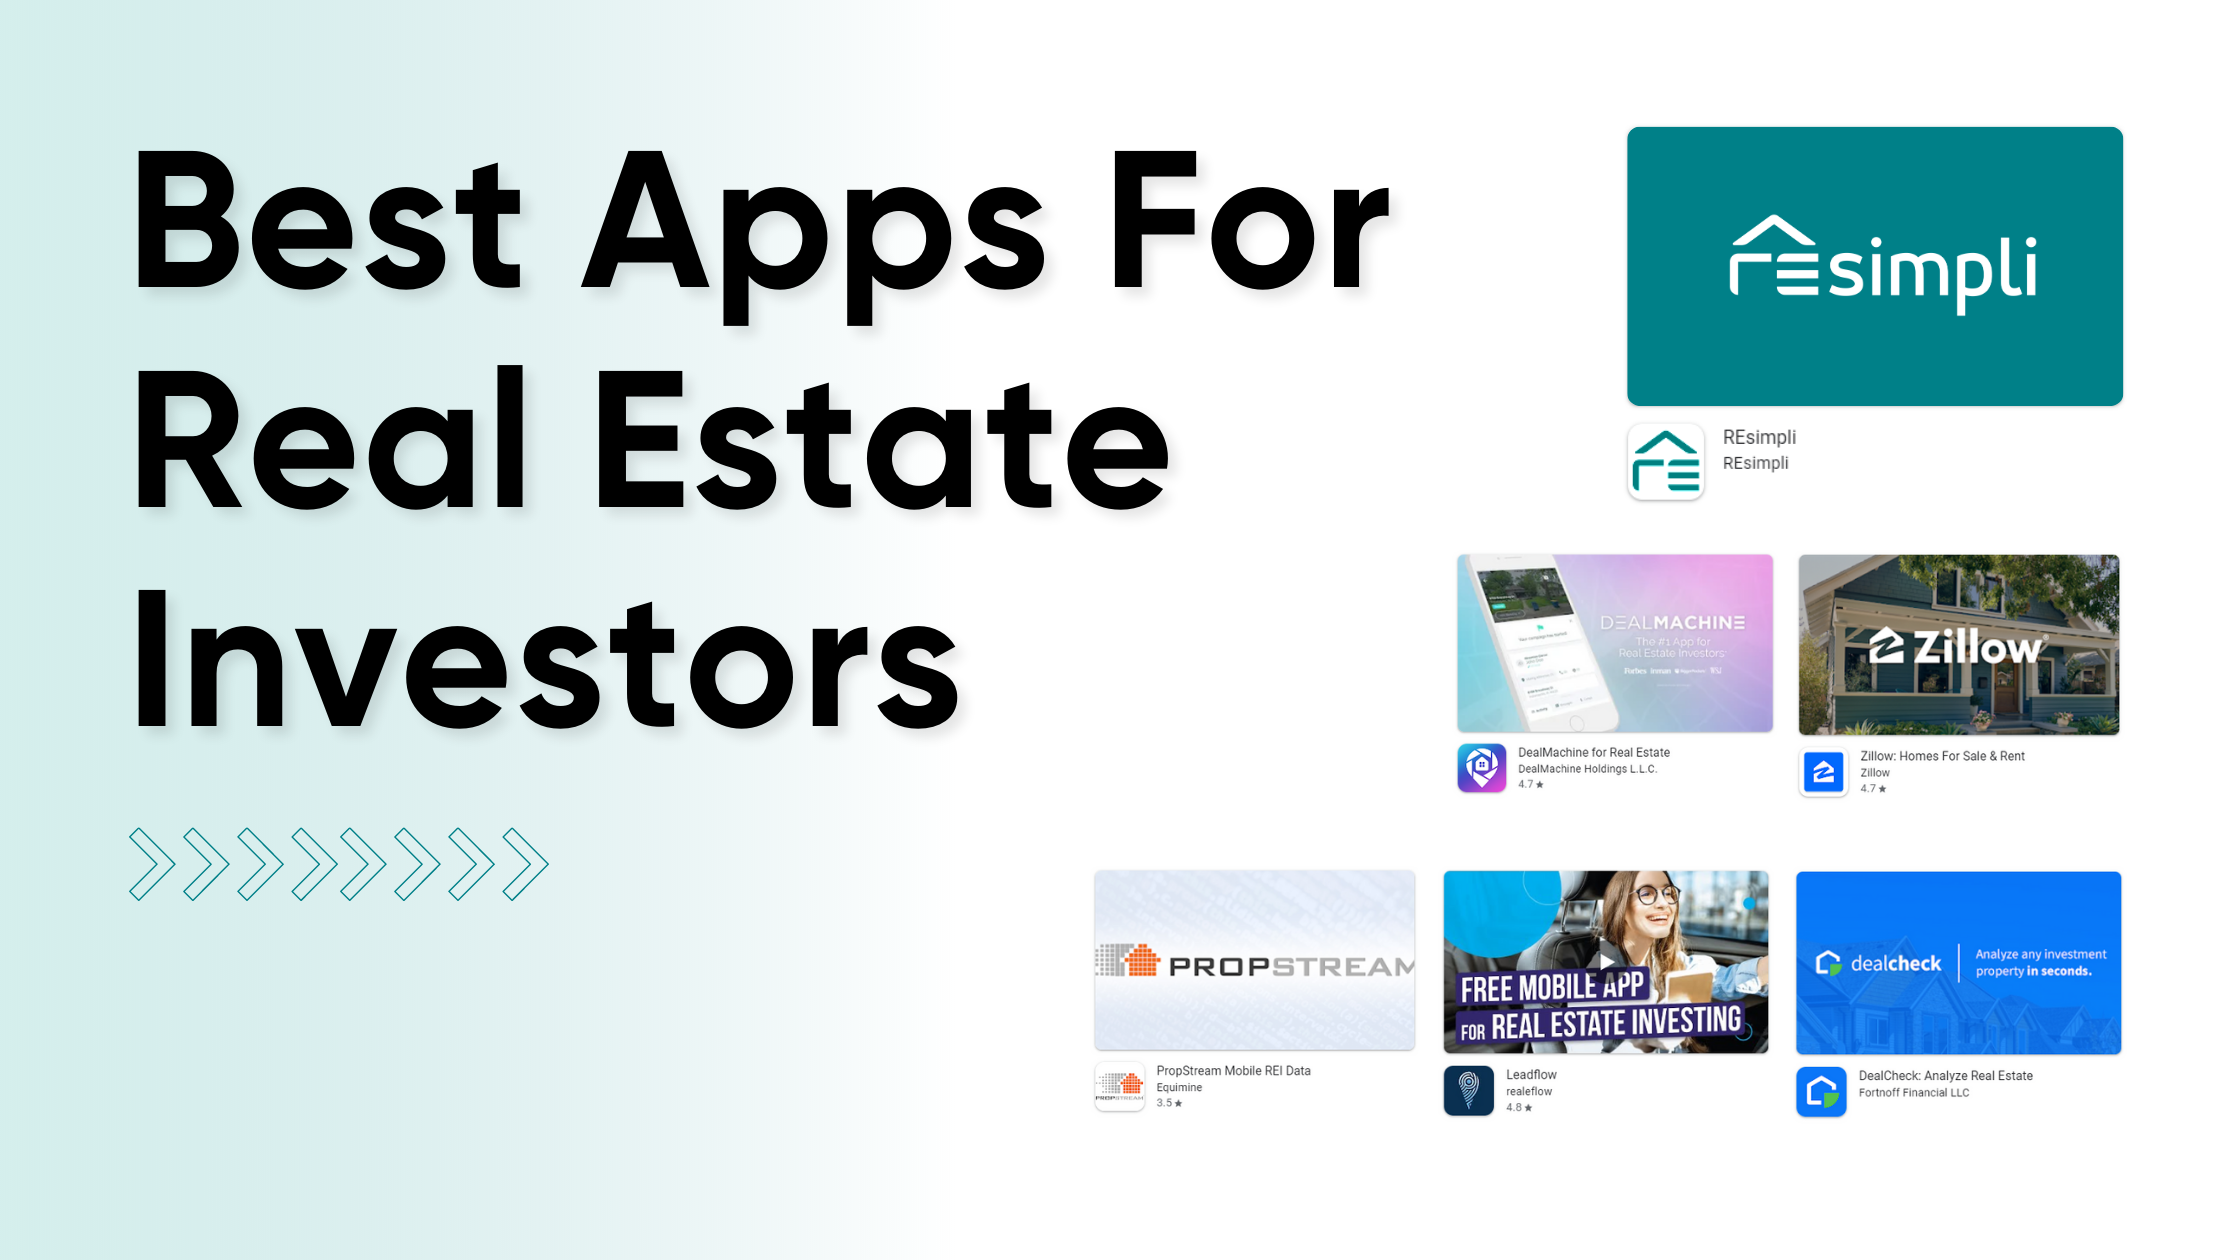 The Best Apps for Real Estate Investors